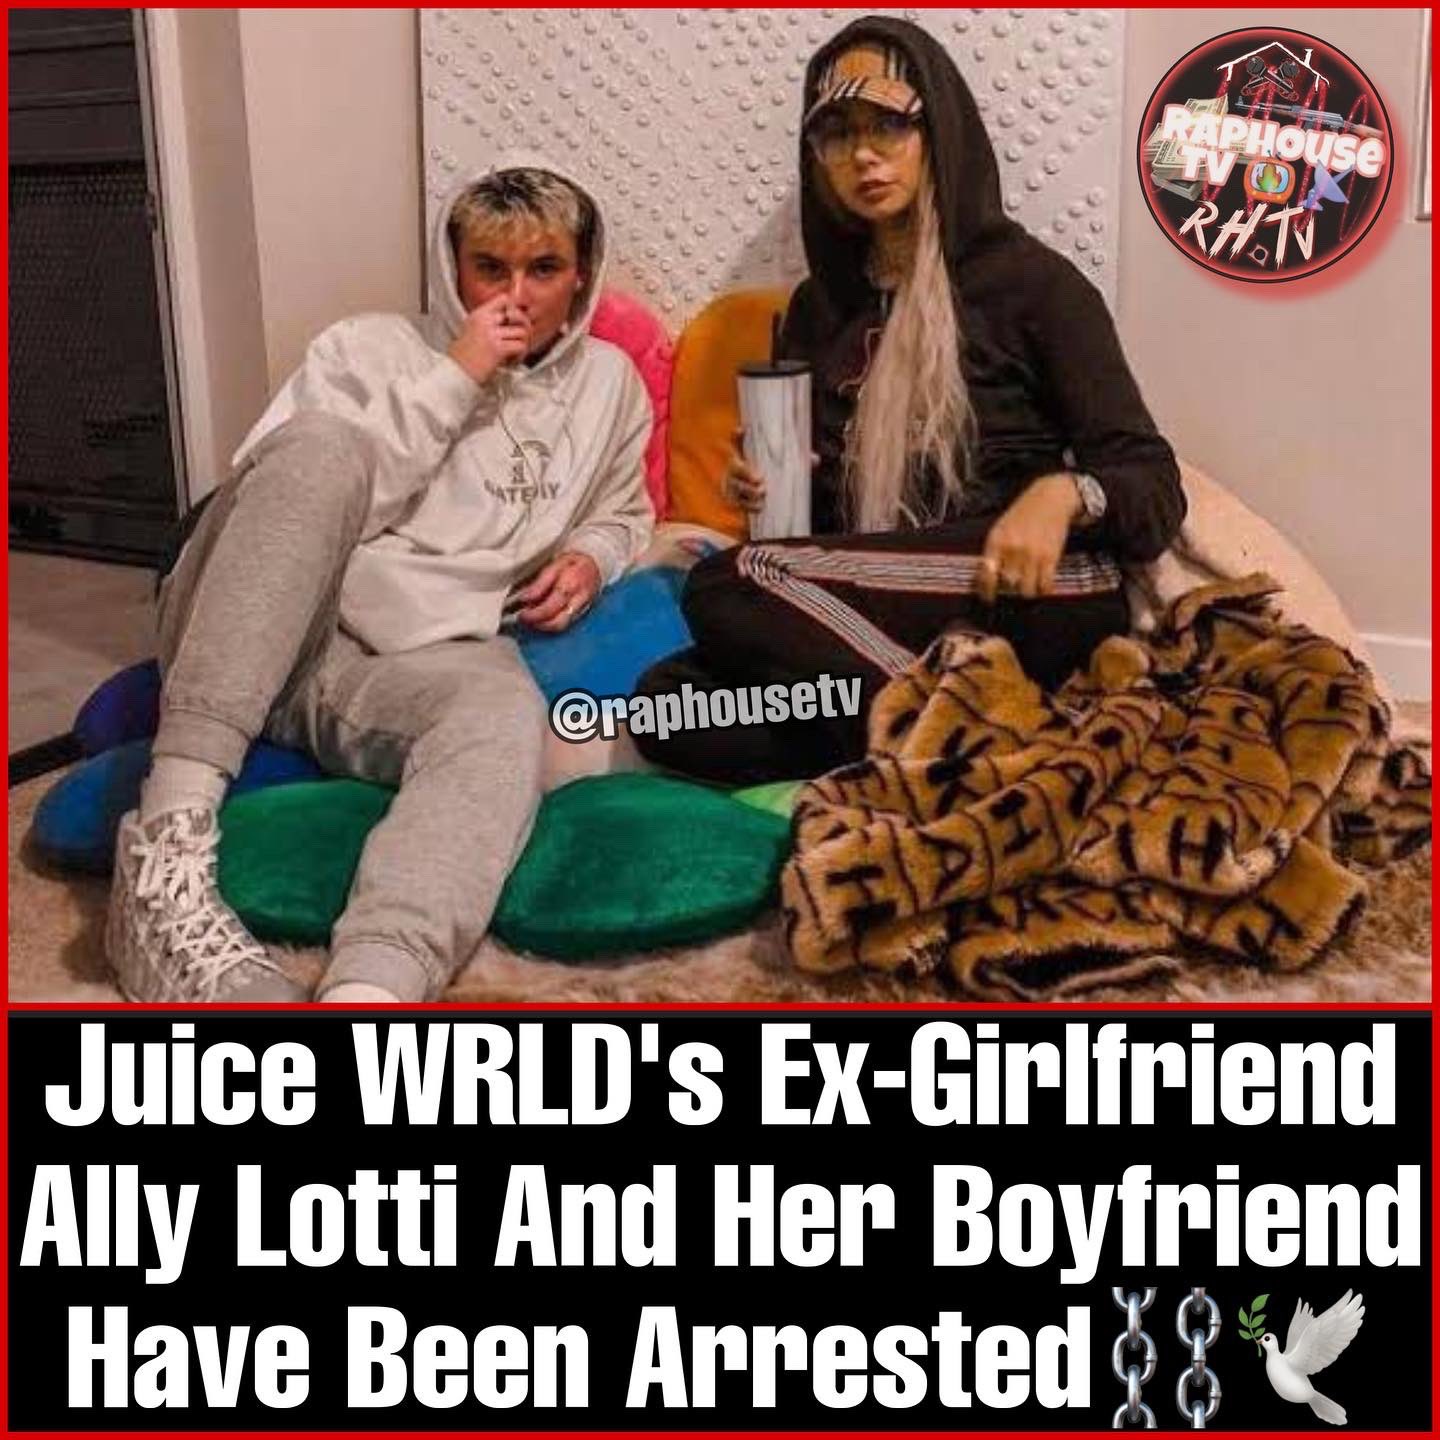 Fans spotted #JuiceWRLD's ex #AllyLotti's boyfriend allegedly